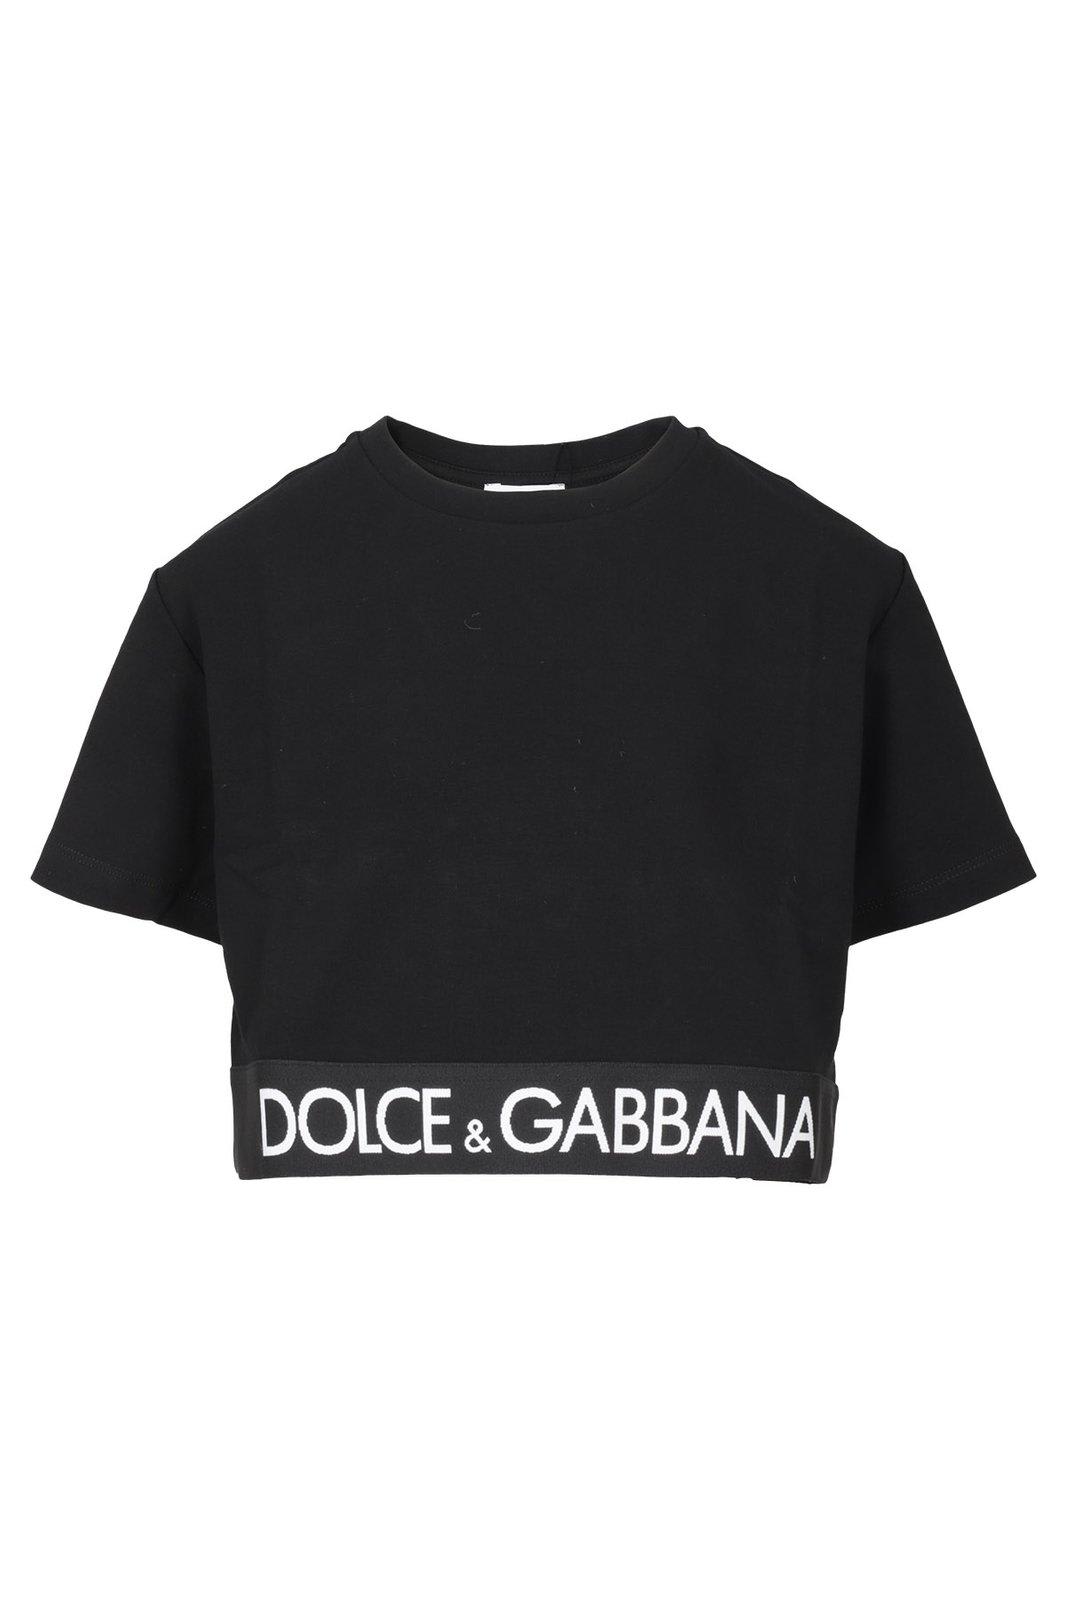 Dolce & Gabbana Crewneck Cropped T-shirt